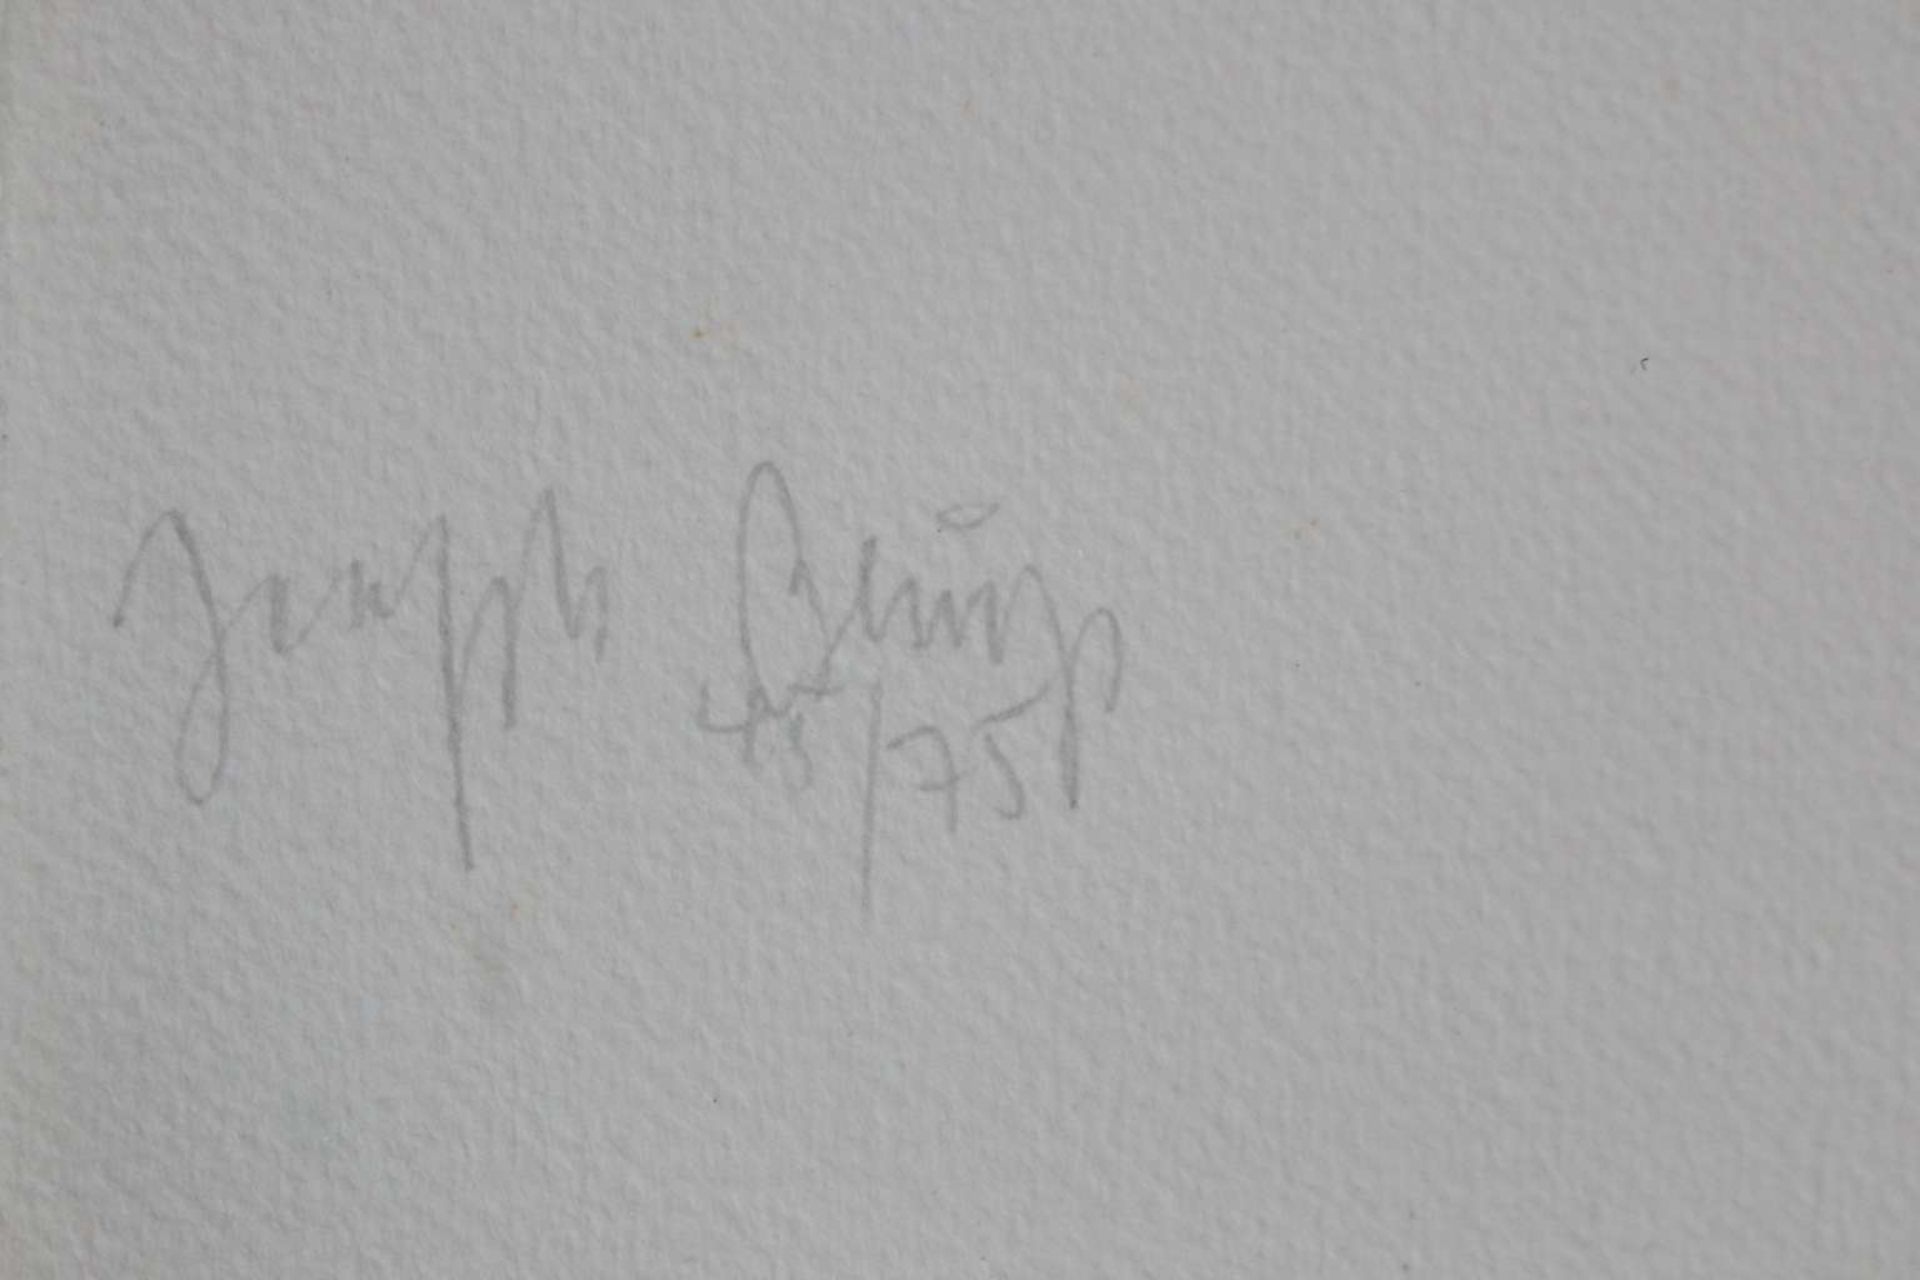 Beuys Grafik - Image 3 of 3